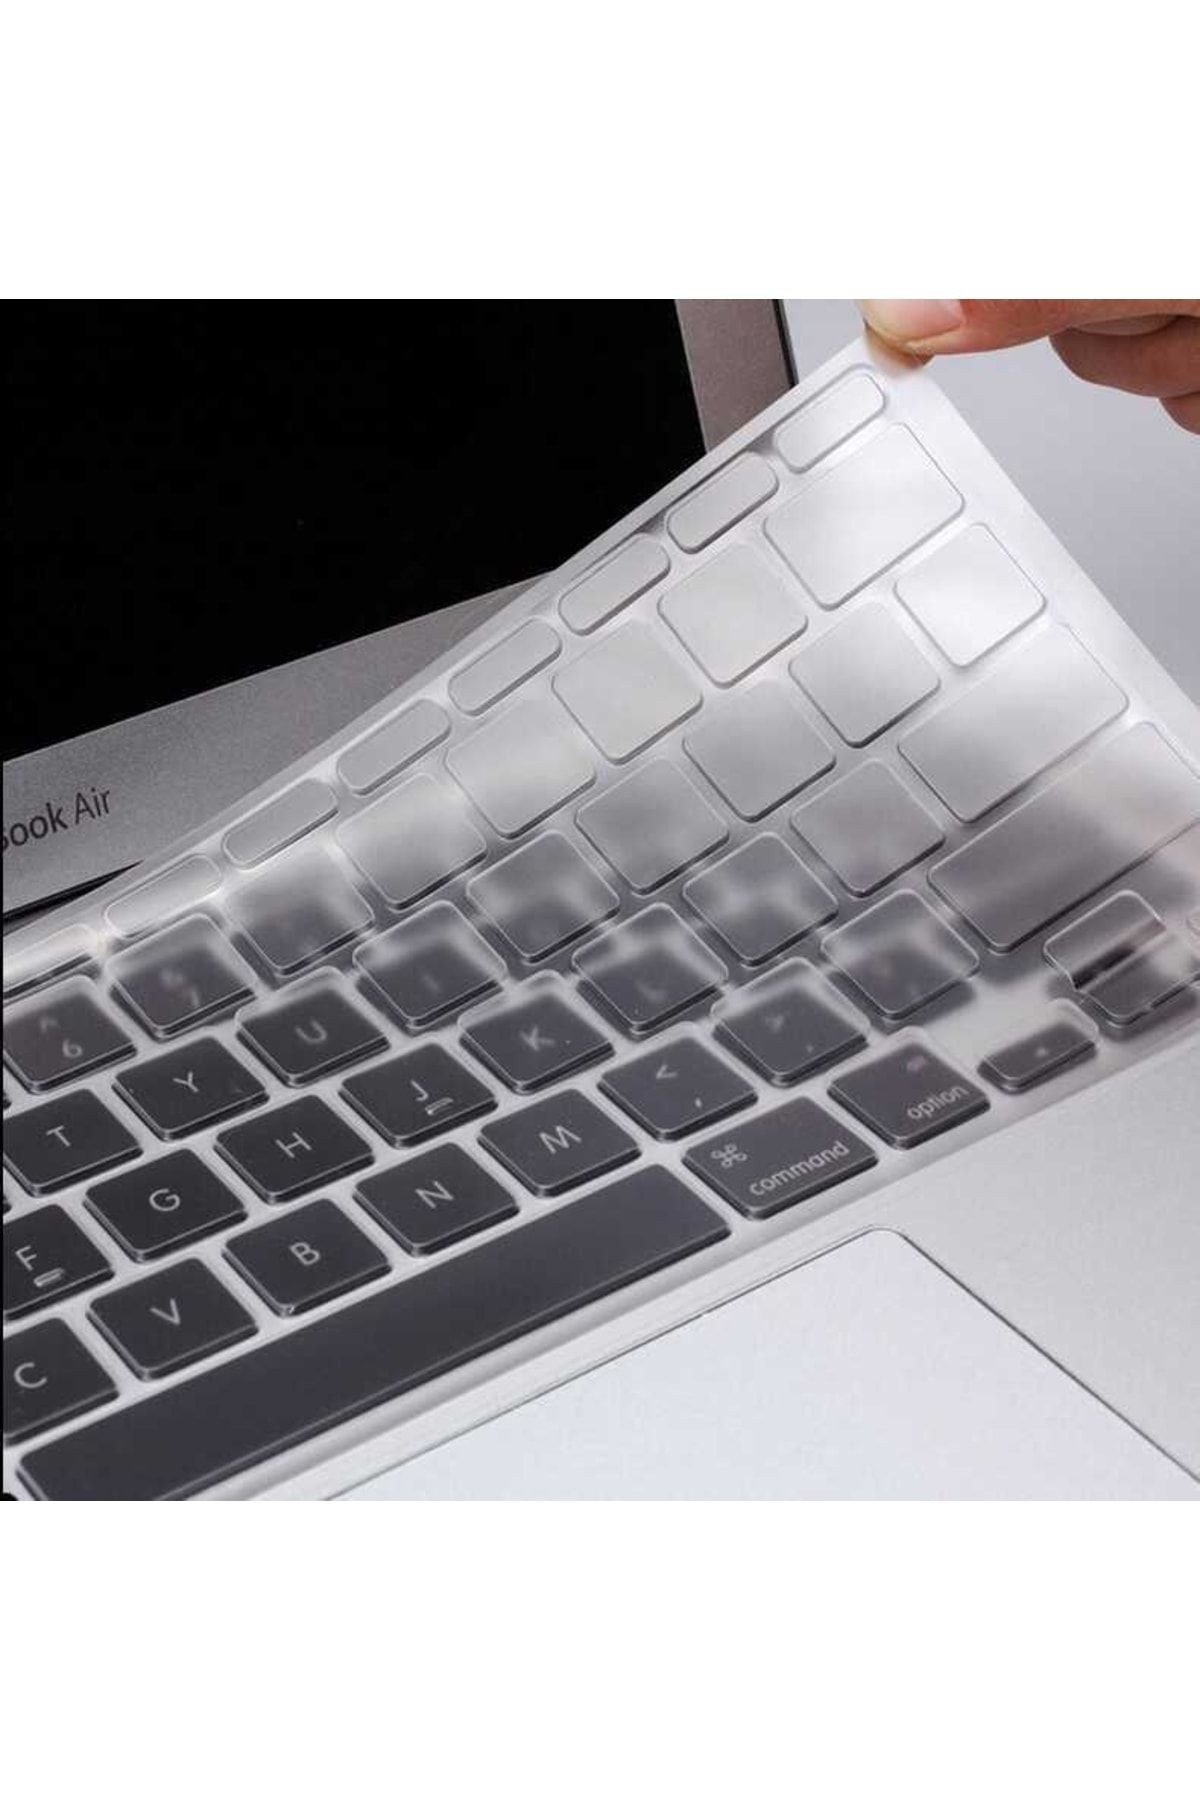 UnDePlus Apple Macbook 15.4' Pro A1286 Retina Klavye Koruyucu Şeffaf Silikon Ped